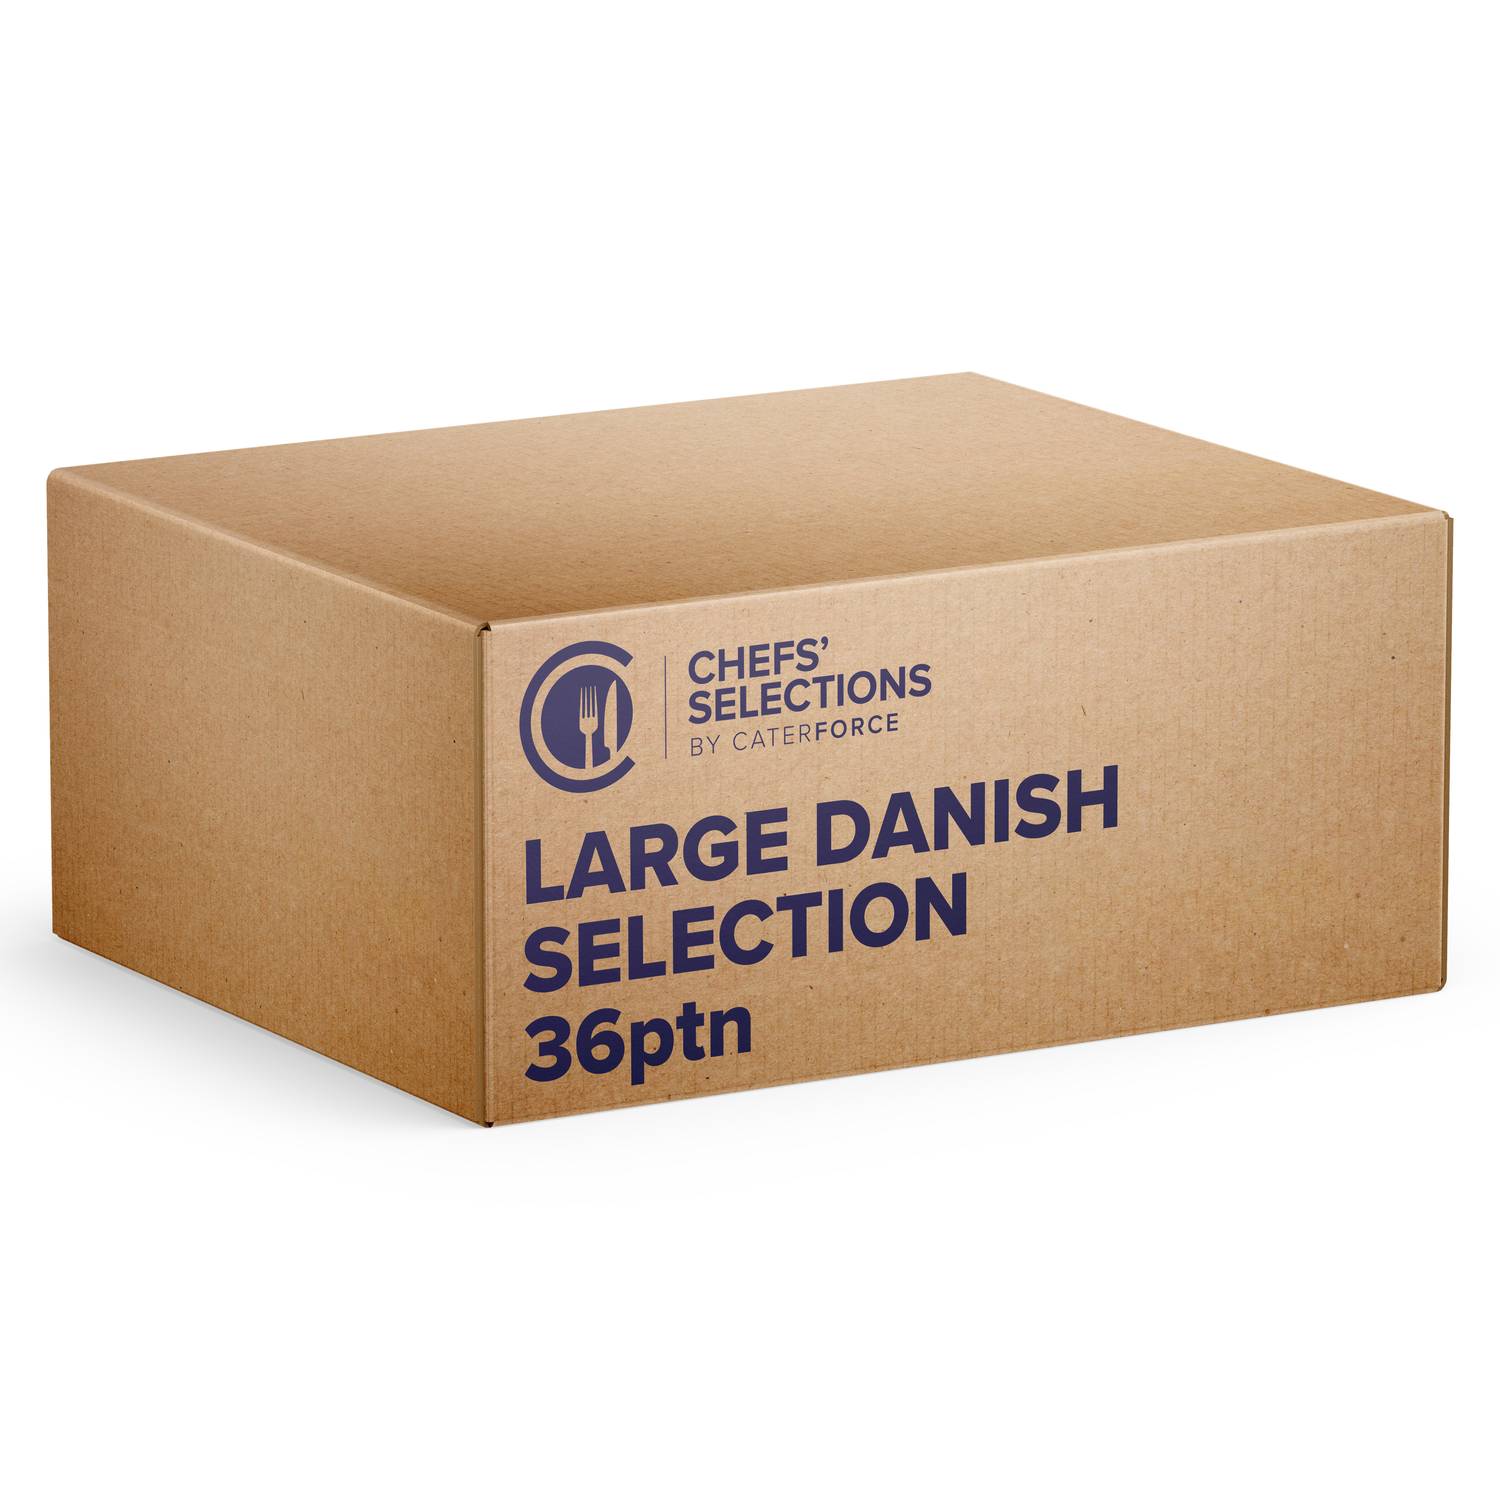 Chefs’ Selections Large Danish Selection (1 x 36ptn)